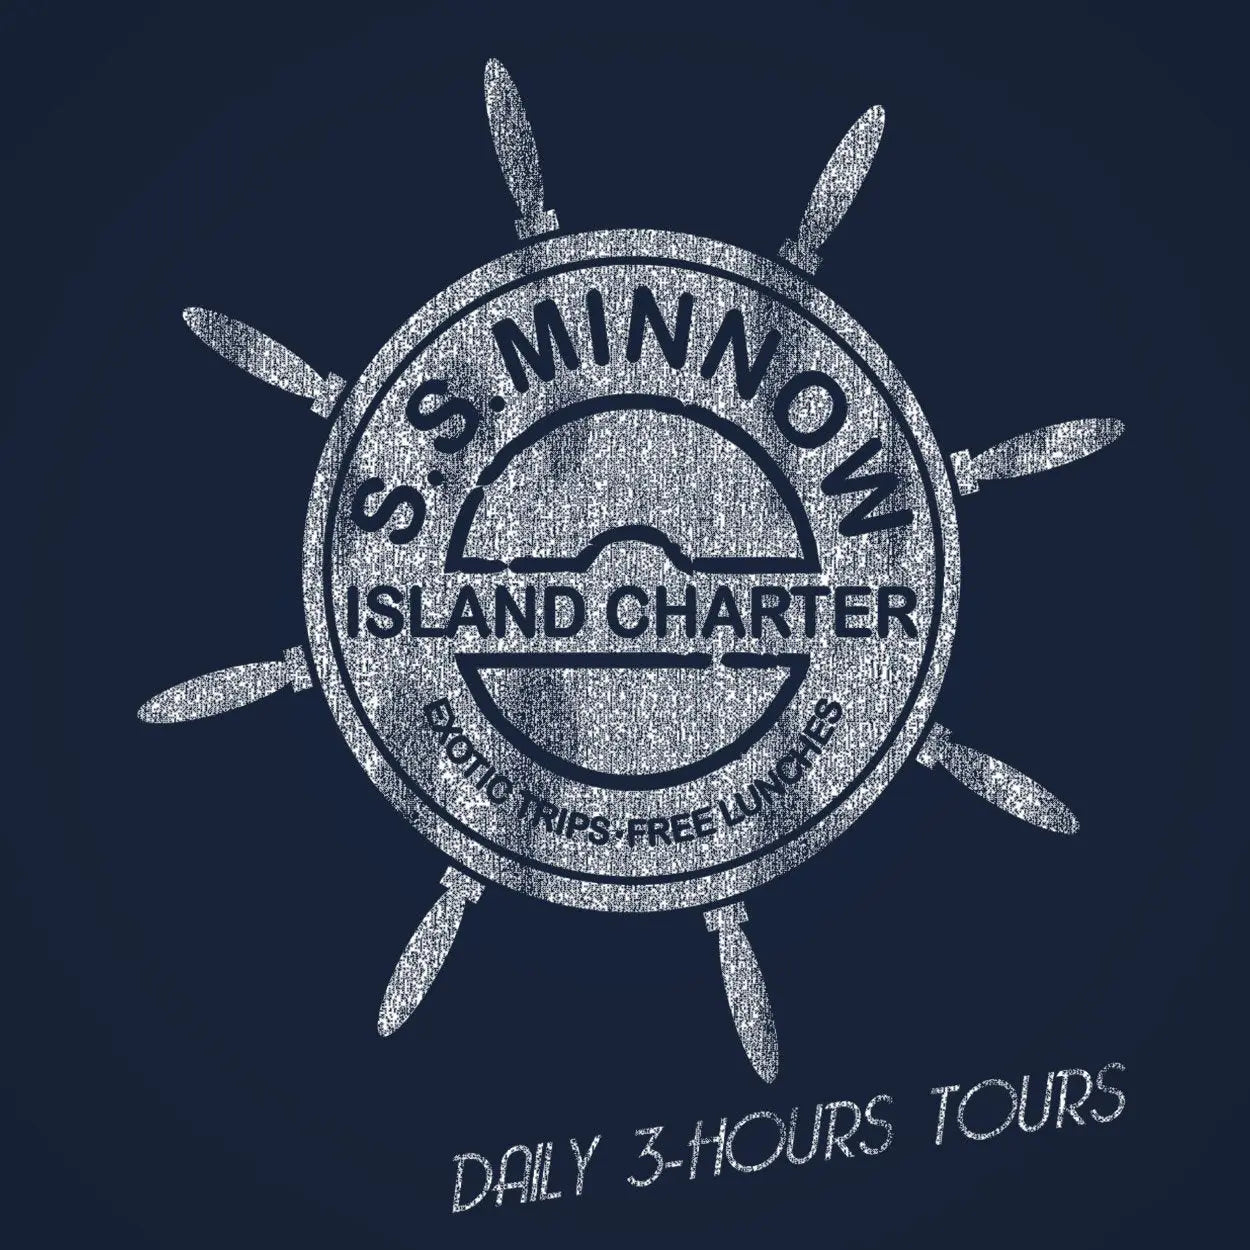 SS Minnow Island Charter